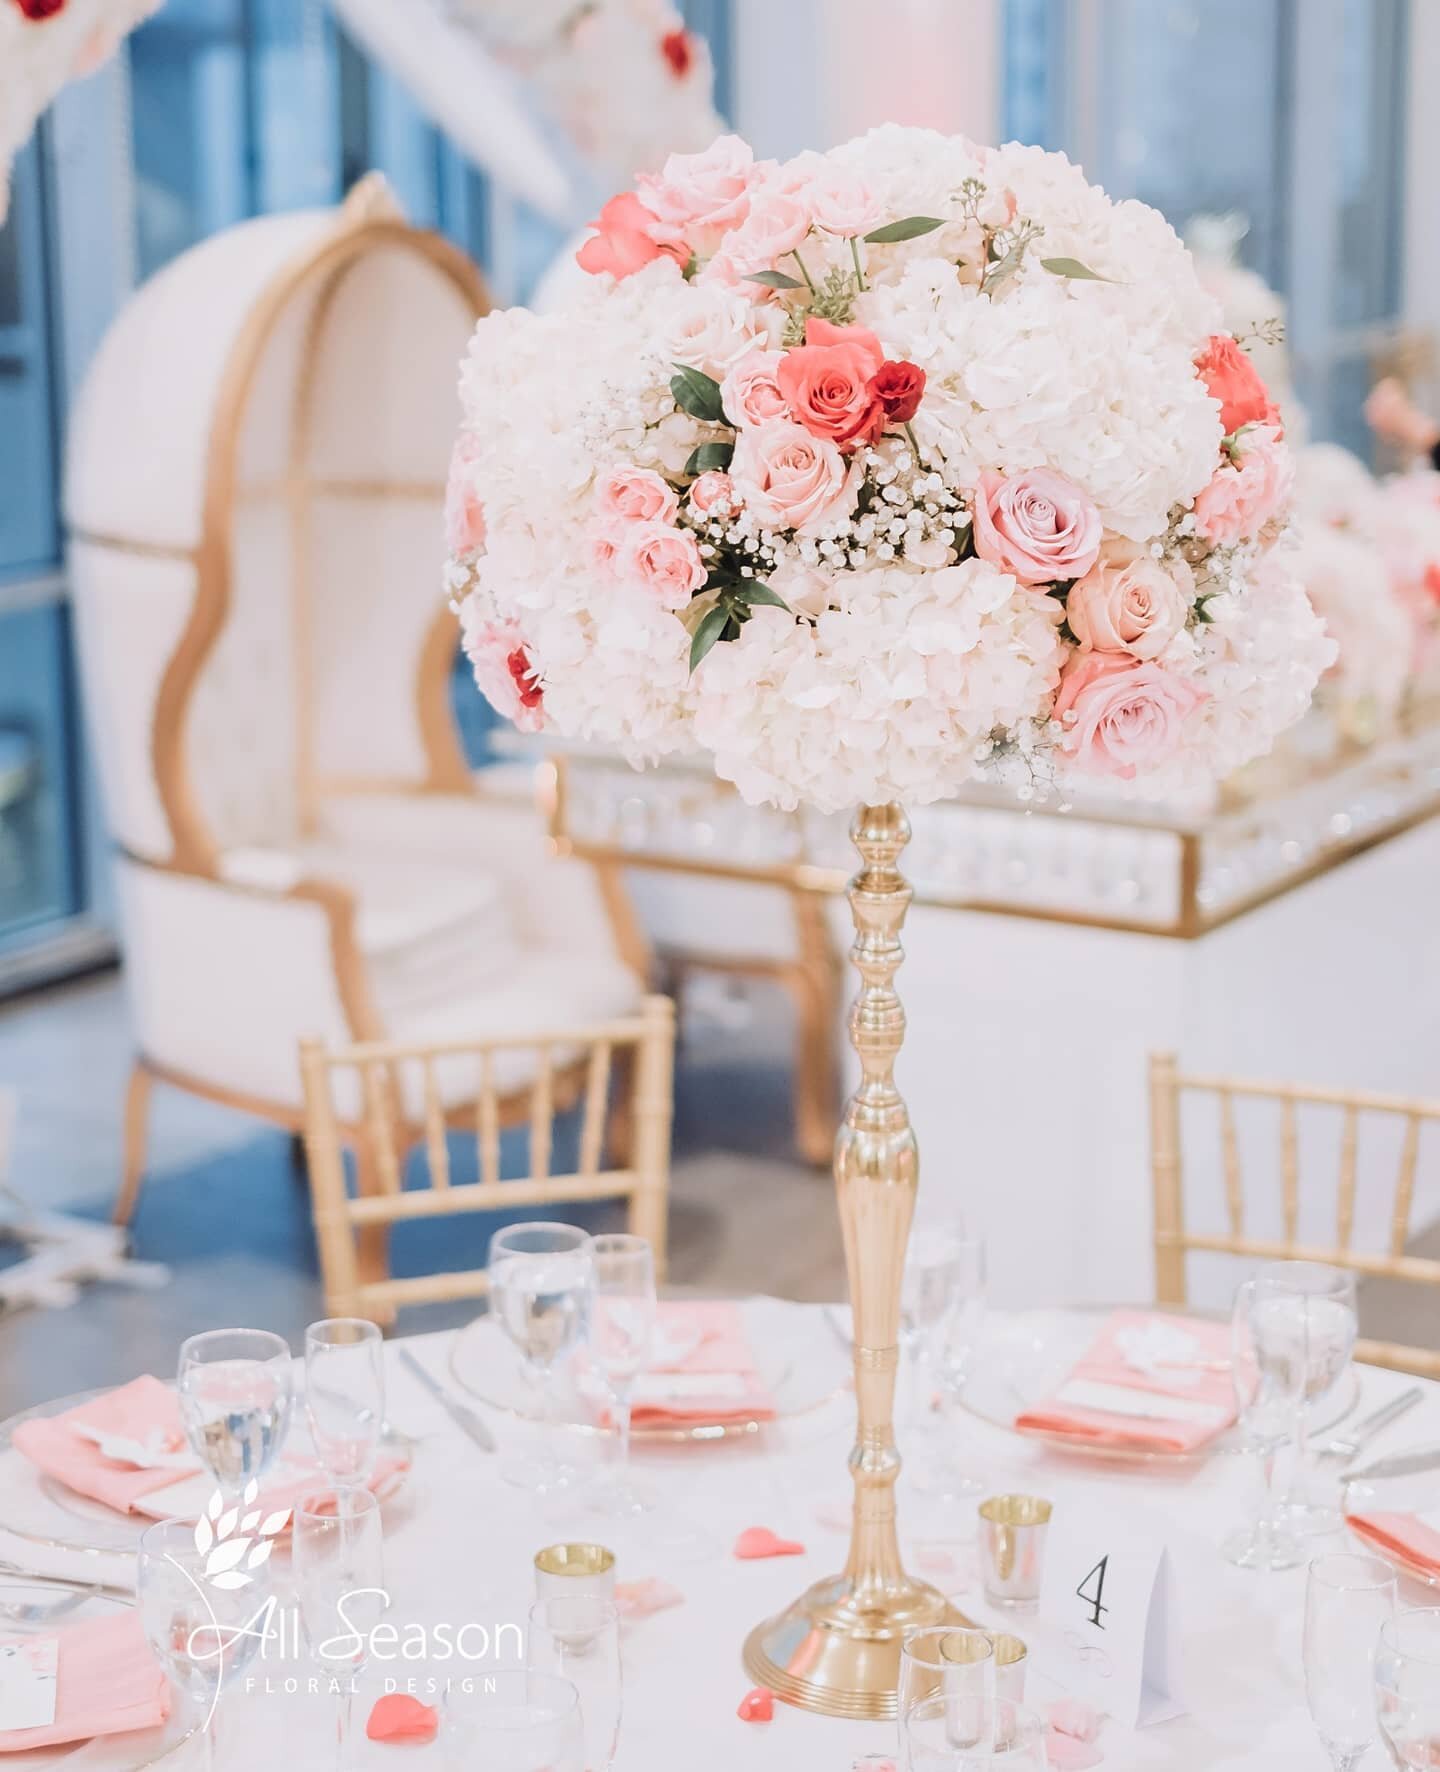 🌷 Hydrangea and Roses Centerpiece for this Romantic Wedding

Venue : The W LOFT
Planner : Genesis Wedding